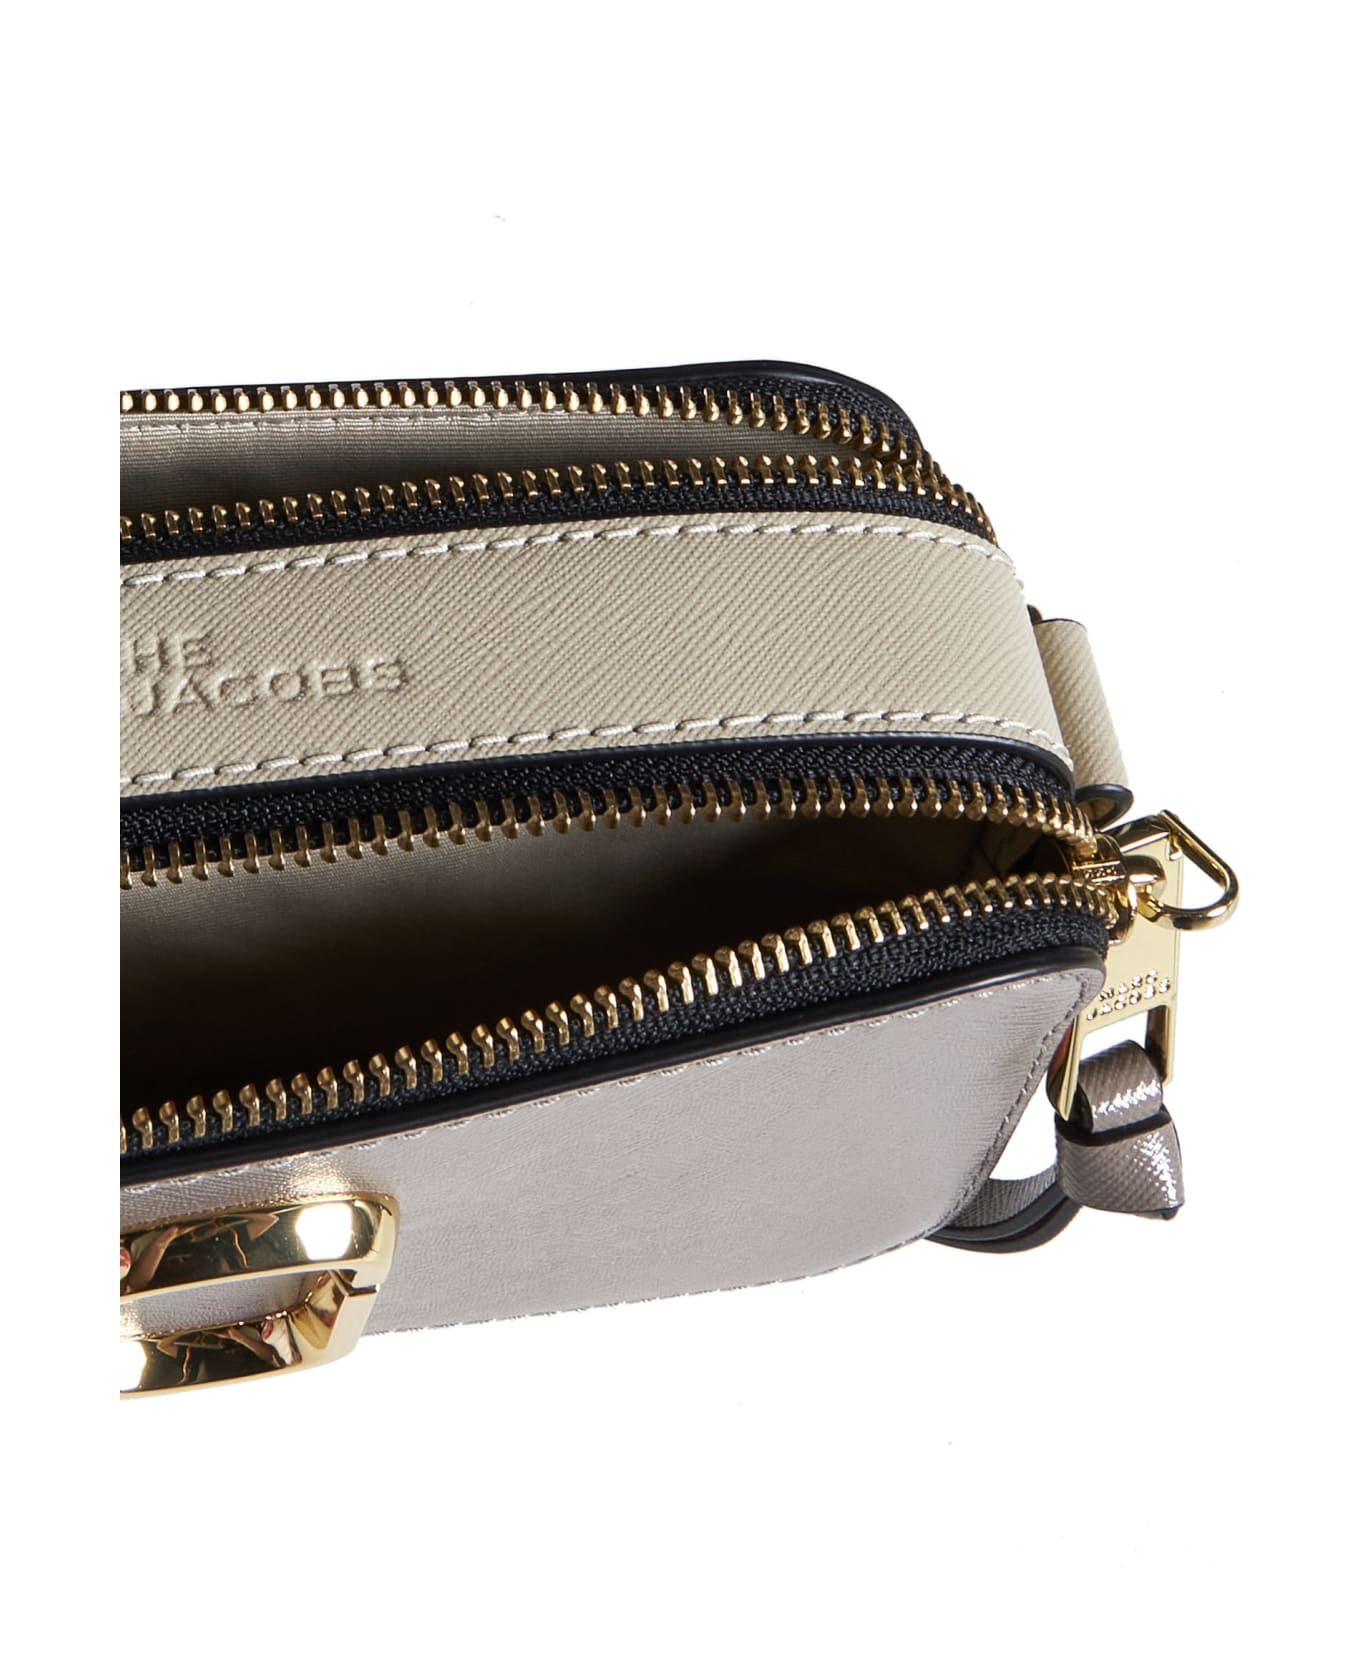 Marc Jacobs Snapshot Leather Shoulder Bag - Taupe